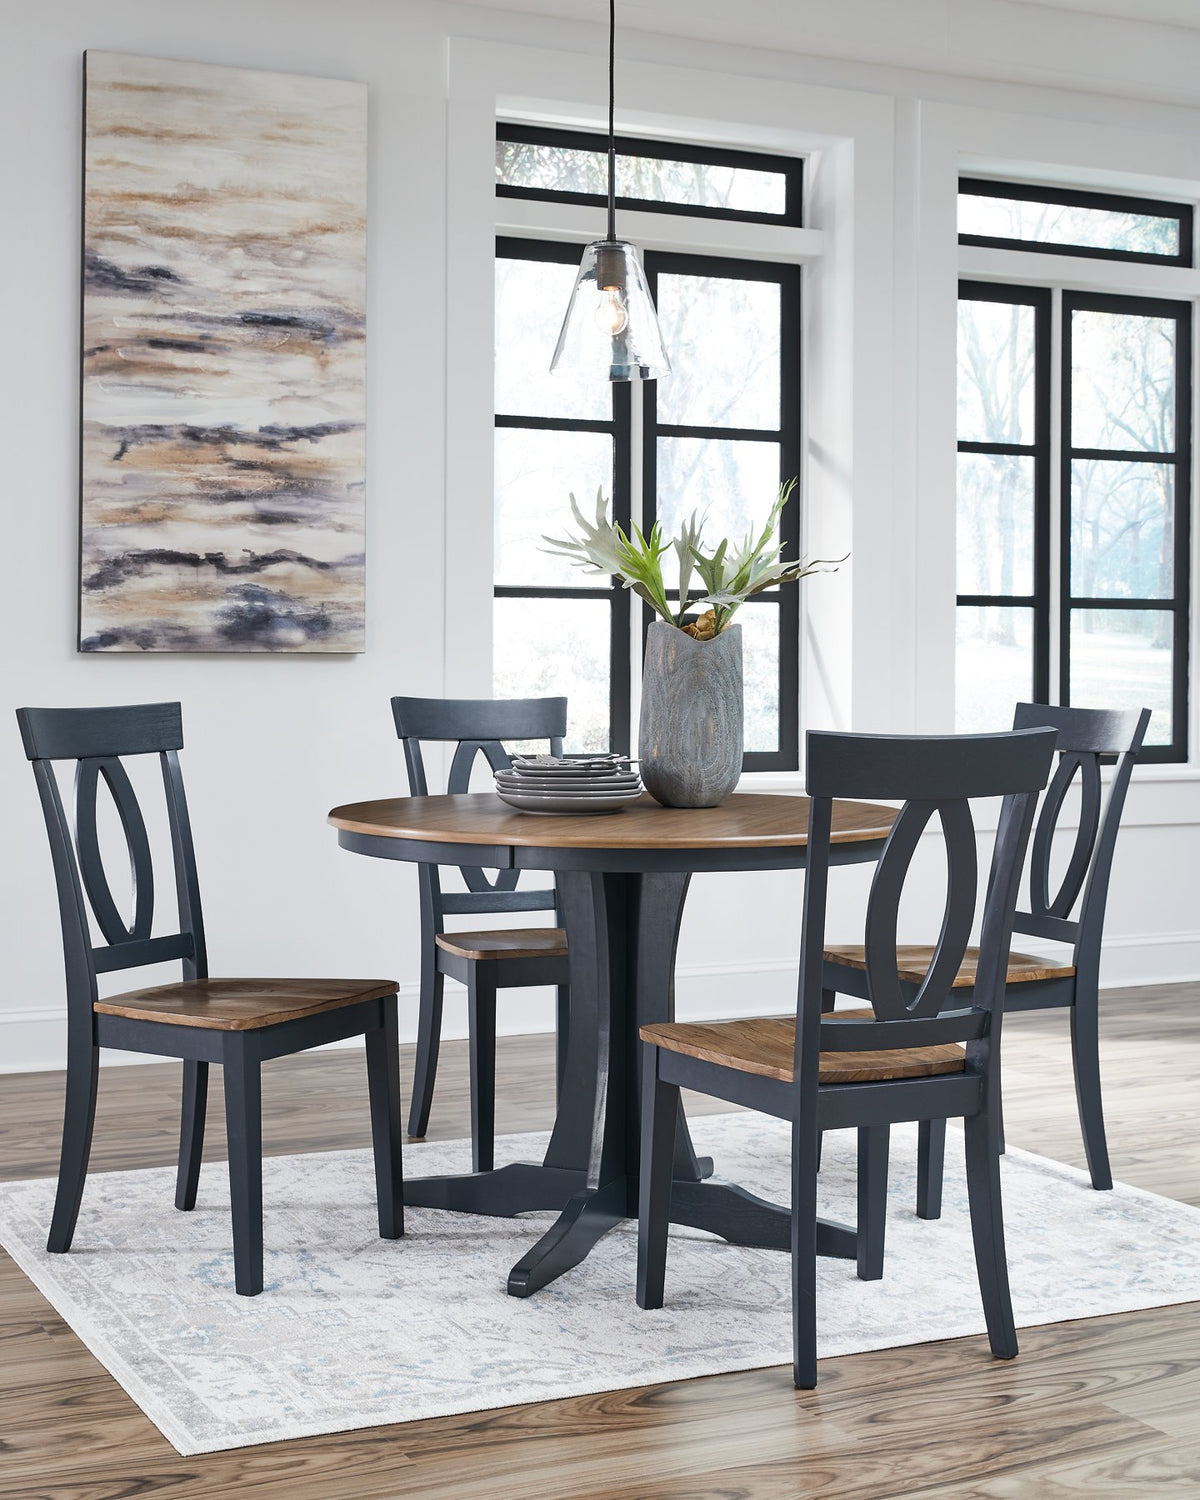 Landocken Dining Room Set - Half Price Furniture